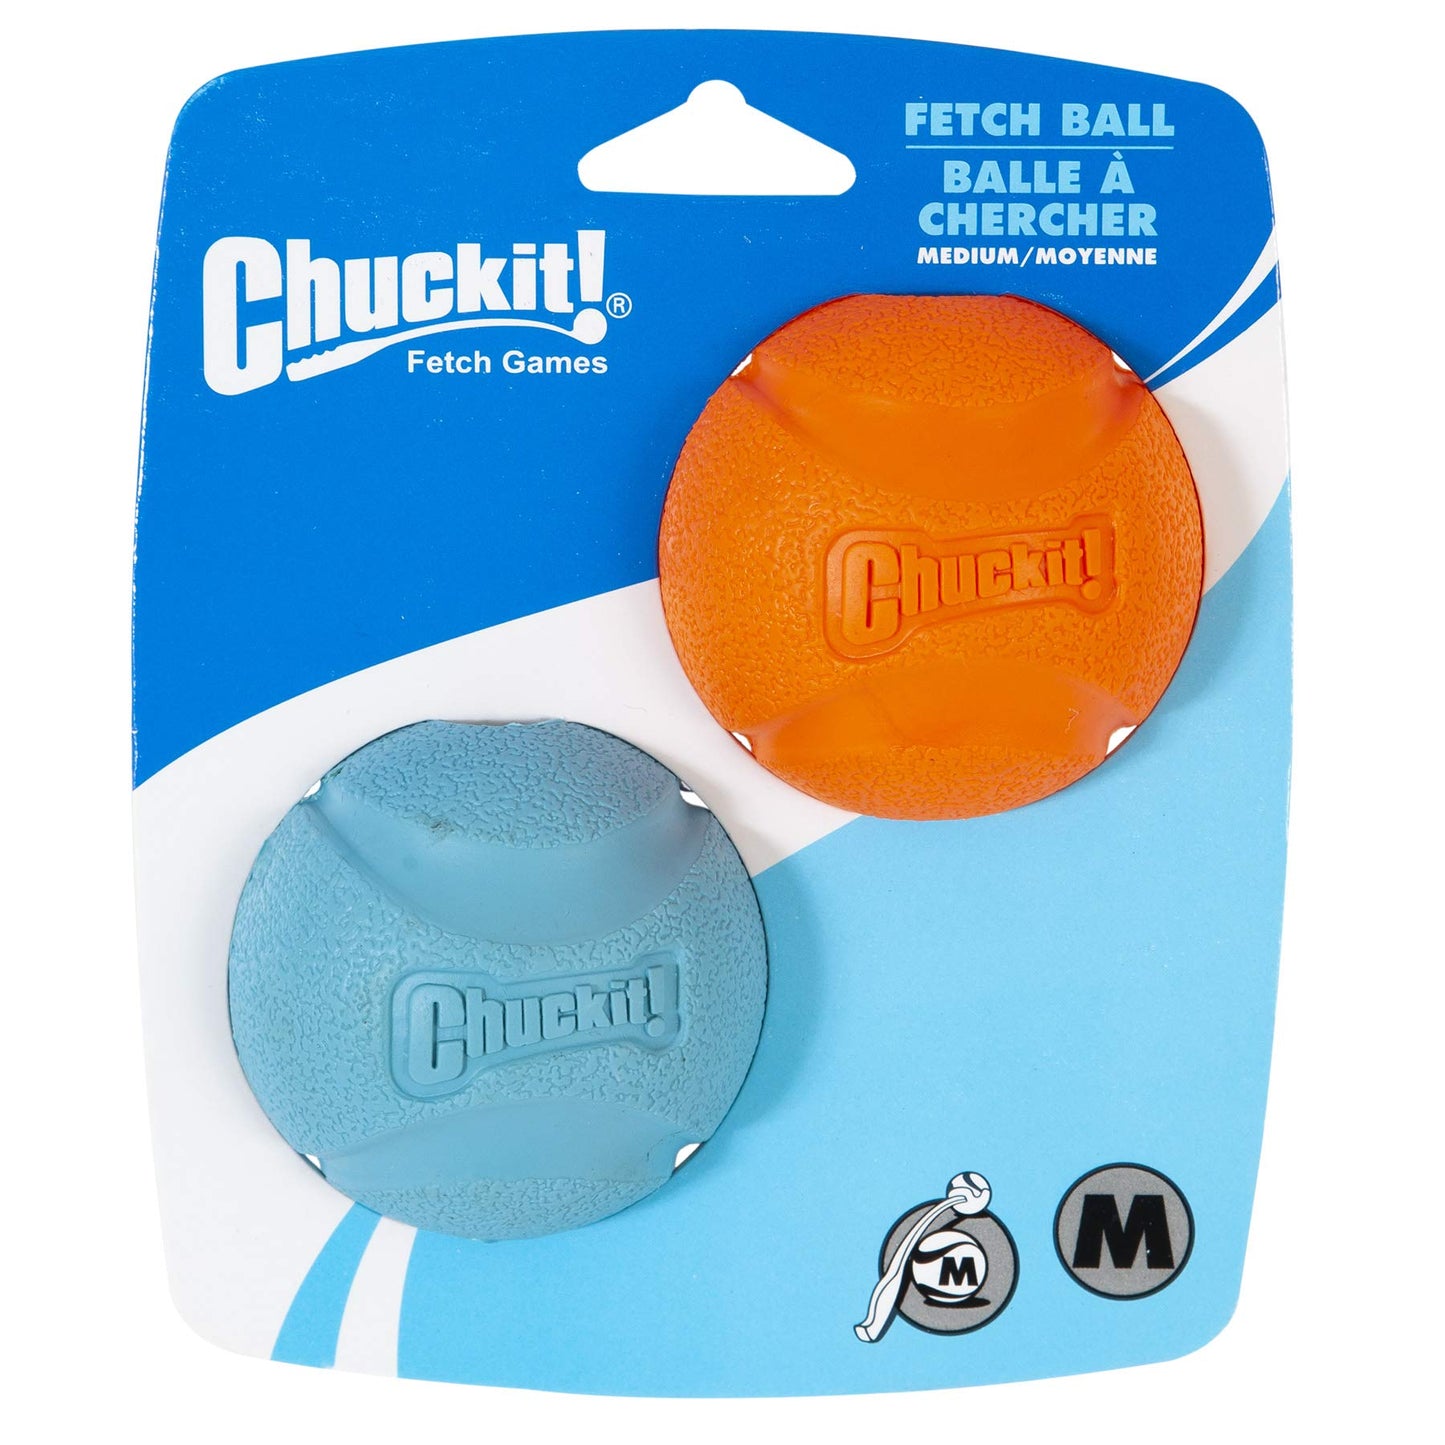 Chuckit! Fetch Ball 2pk